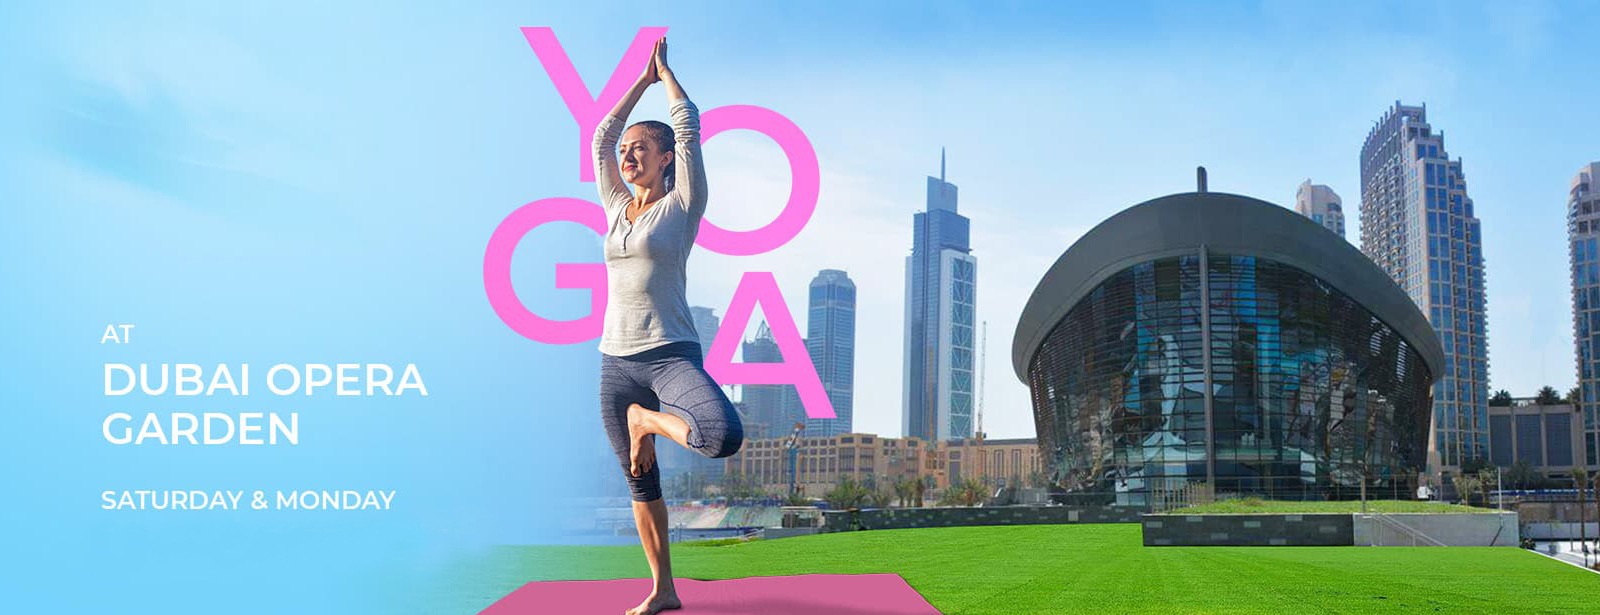 Yoga at Dubai Opera Garden - Coming Soon in UAE